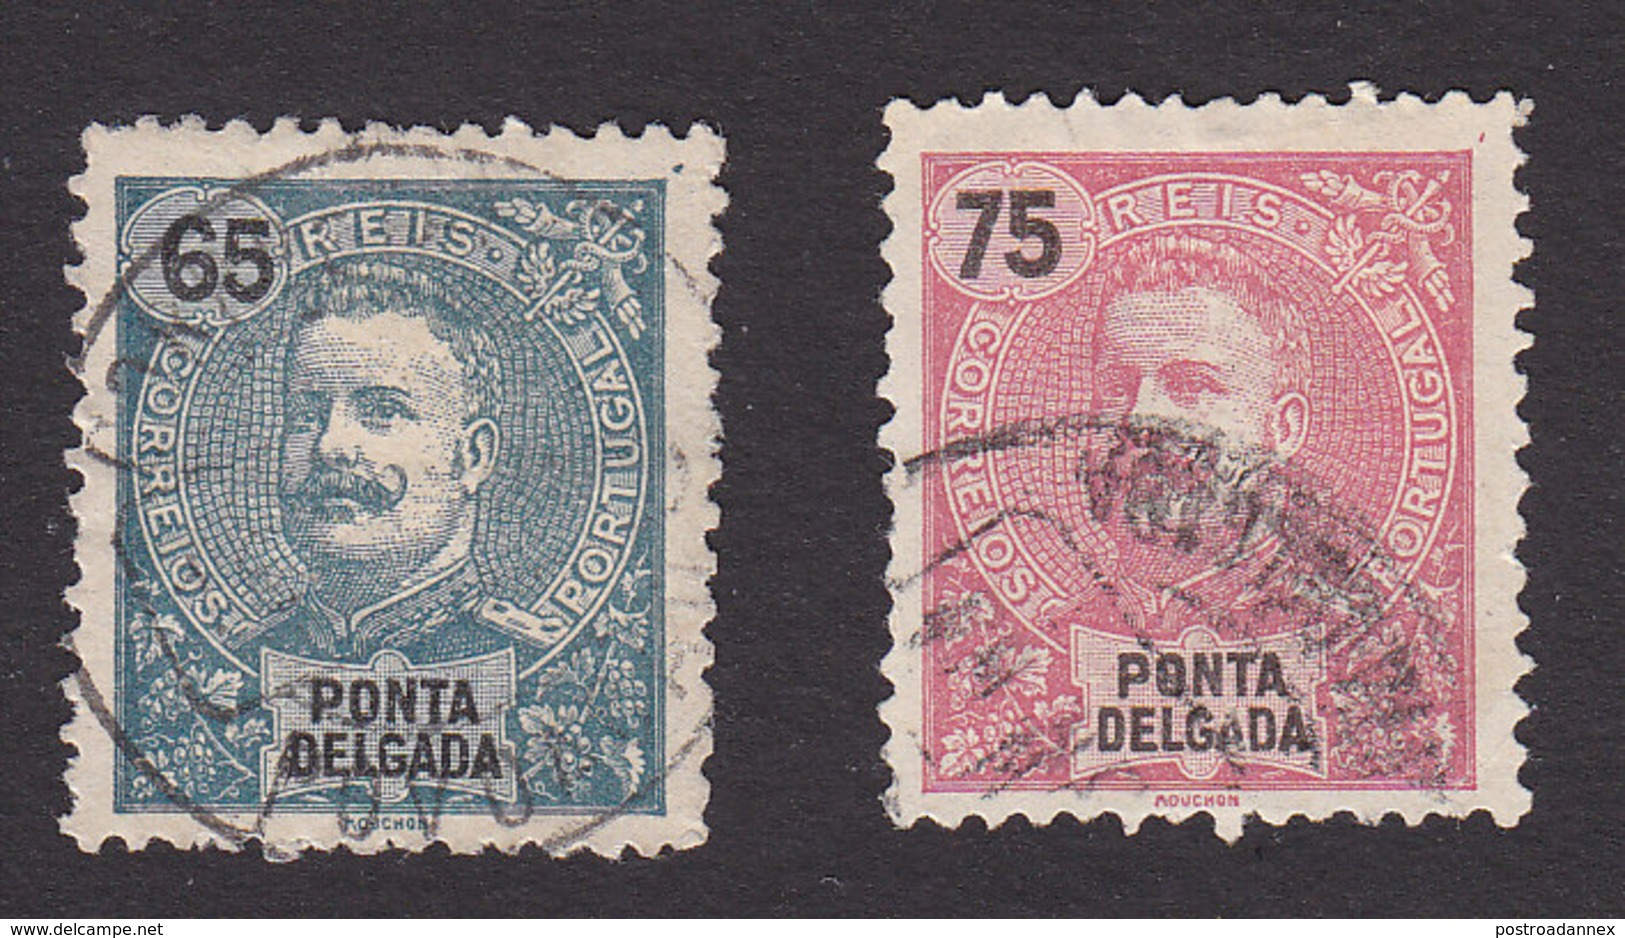 Ponta Delgada, Scott #23-24, Used, King Carlos, Issued 1897 - Ponta Delgada